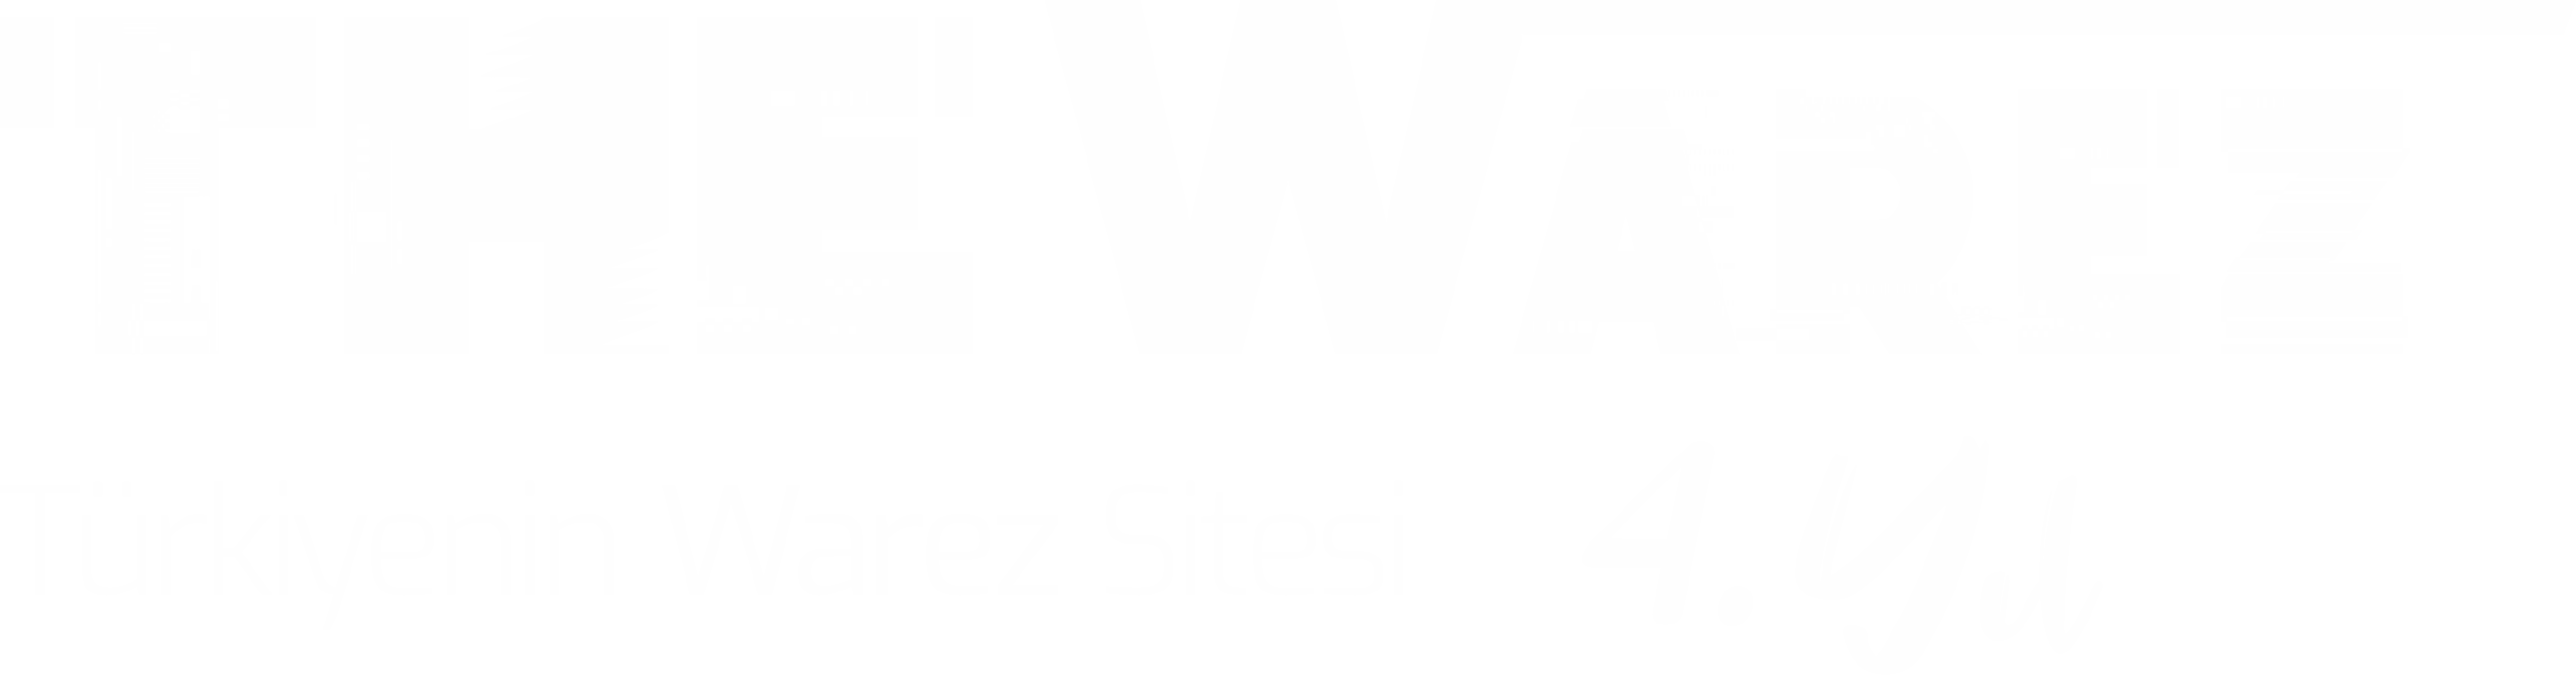 TheWarez Premium